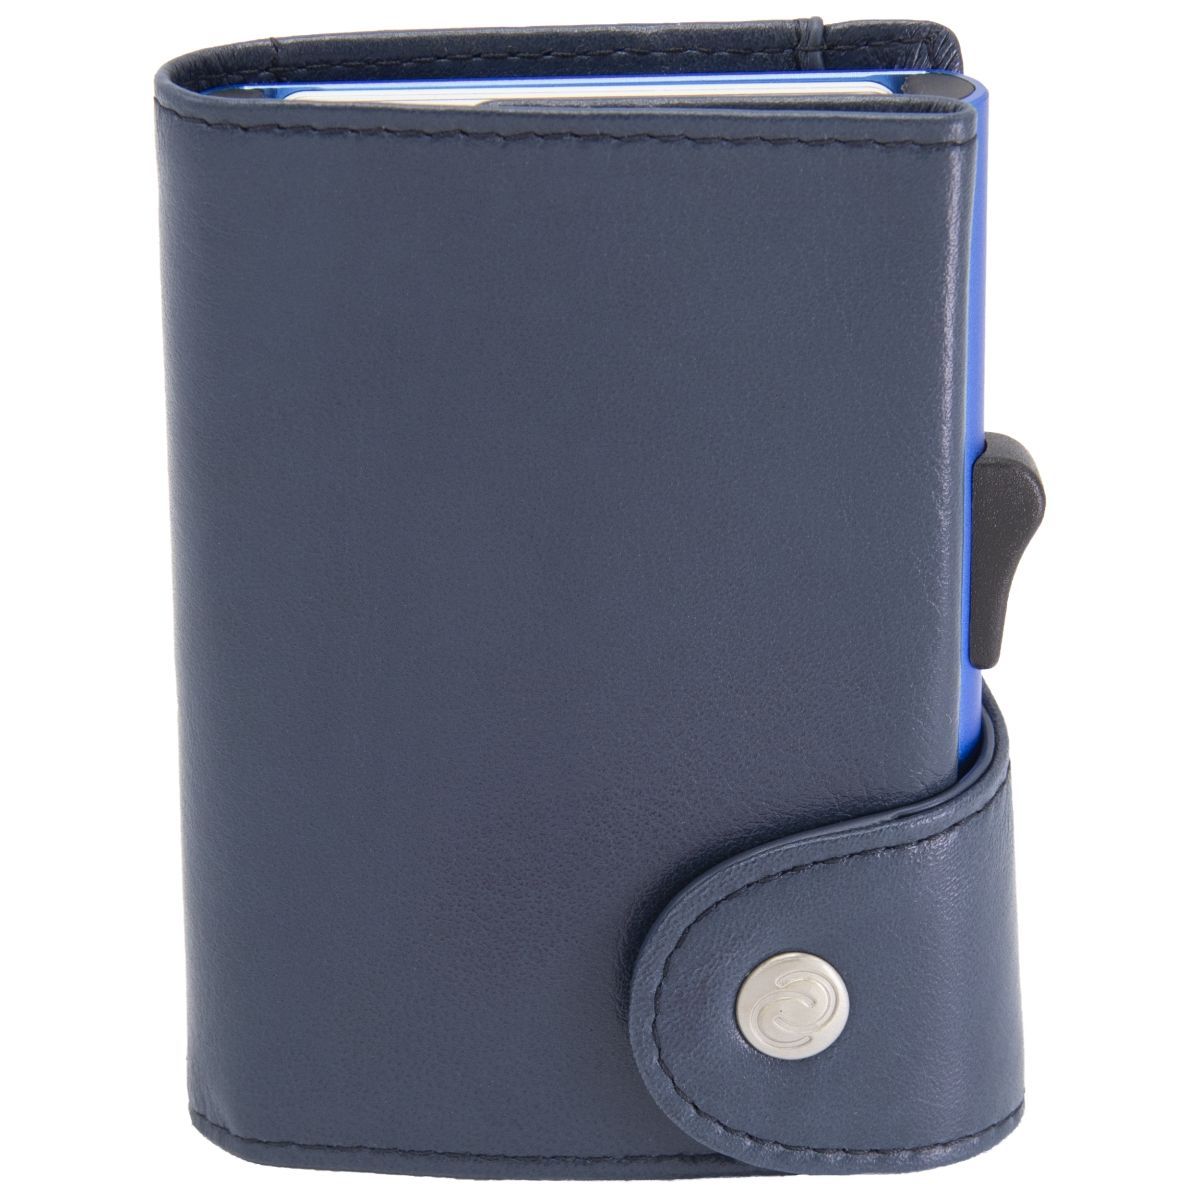 C-Secure ארנק אלומיניום XL בשילוב עור איטלקי עם תא למטבעות - כחול